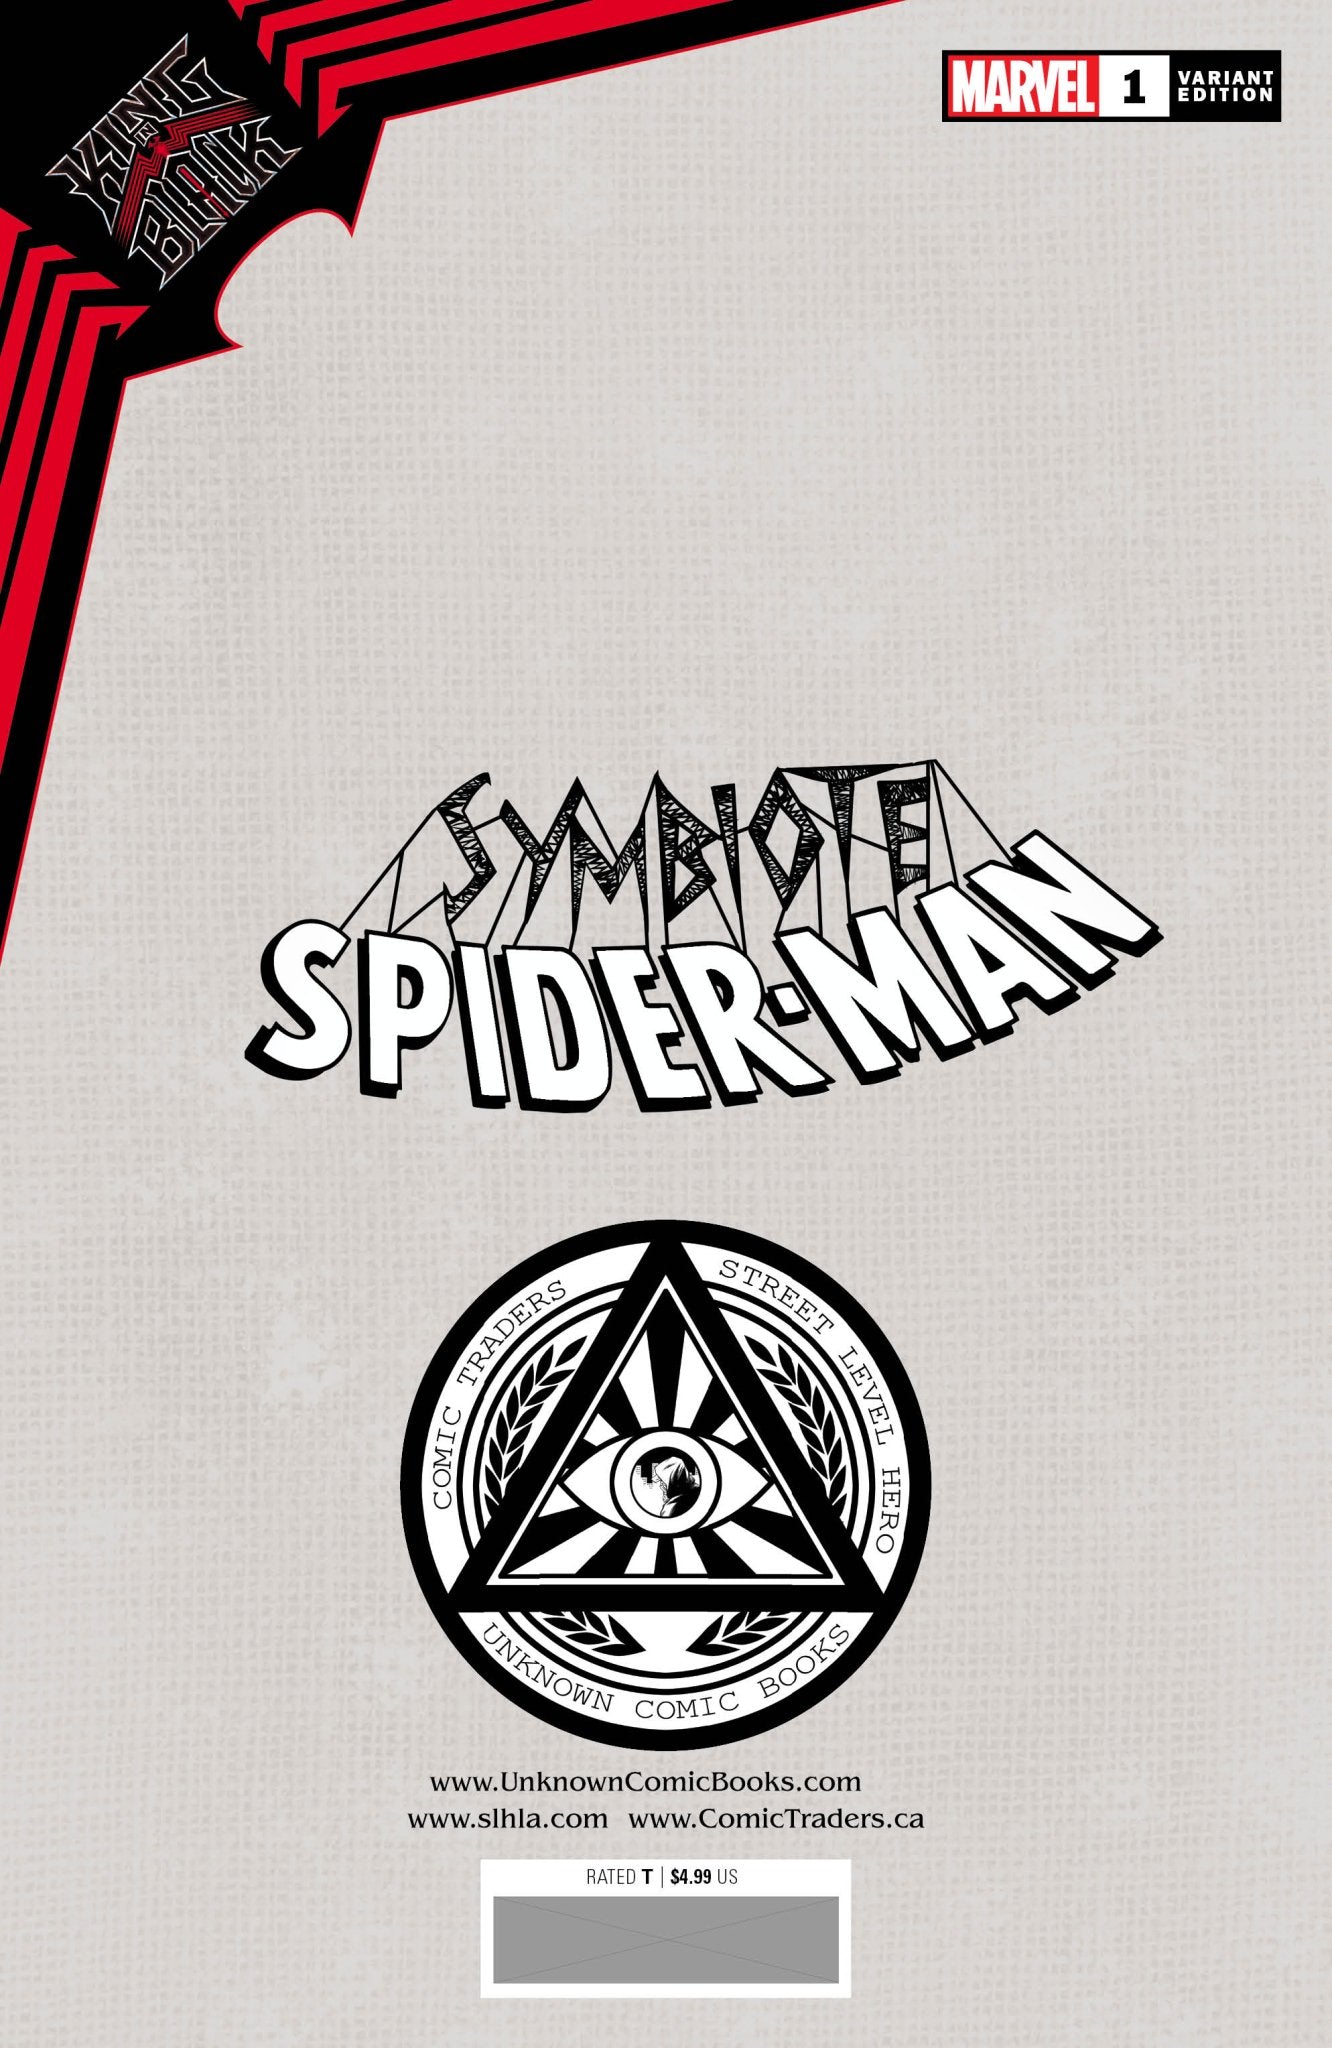 SYMBIOTE SPIDER-MAN KING IN BLACK #1 UNKNOWN COMICS GERALD PAREL EXCLUSIVE VAR (11/18/2020) - FURYCOMIX